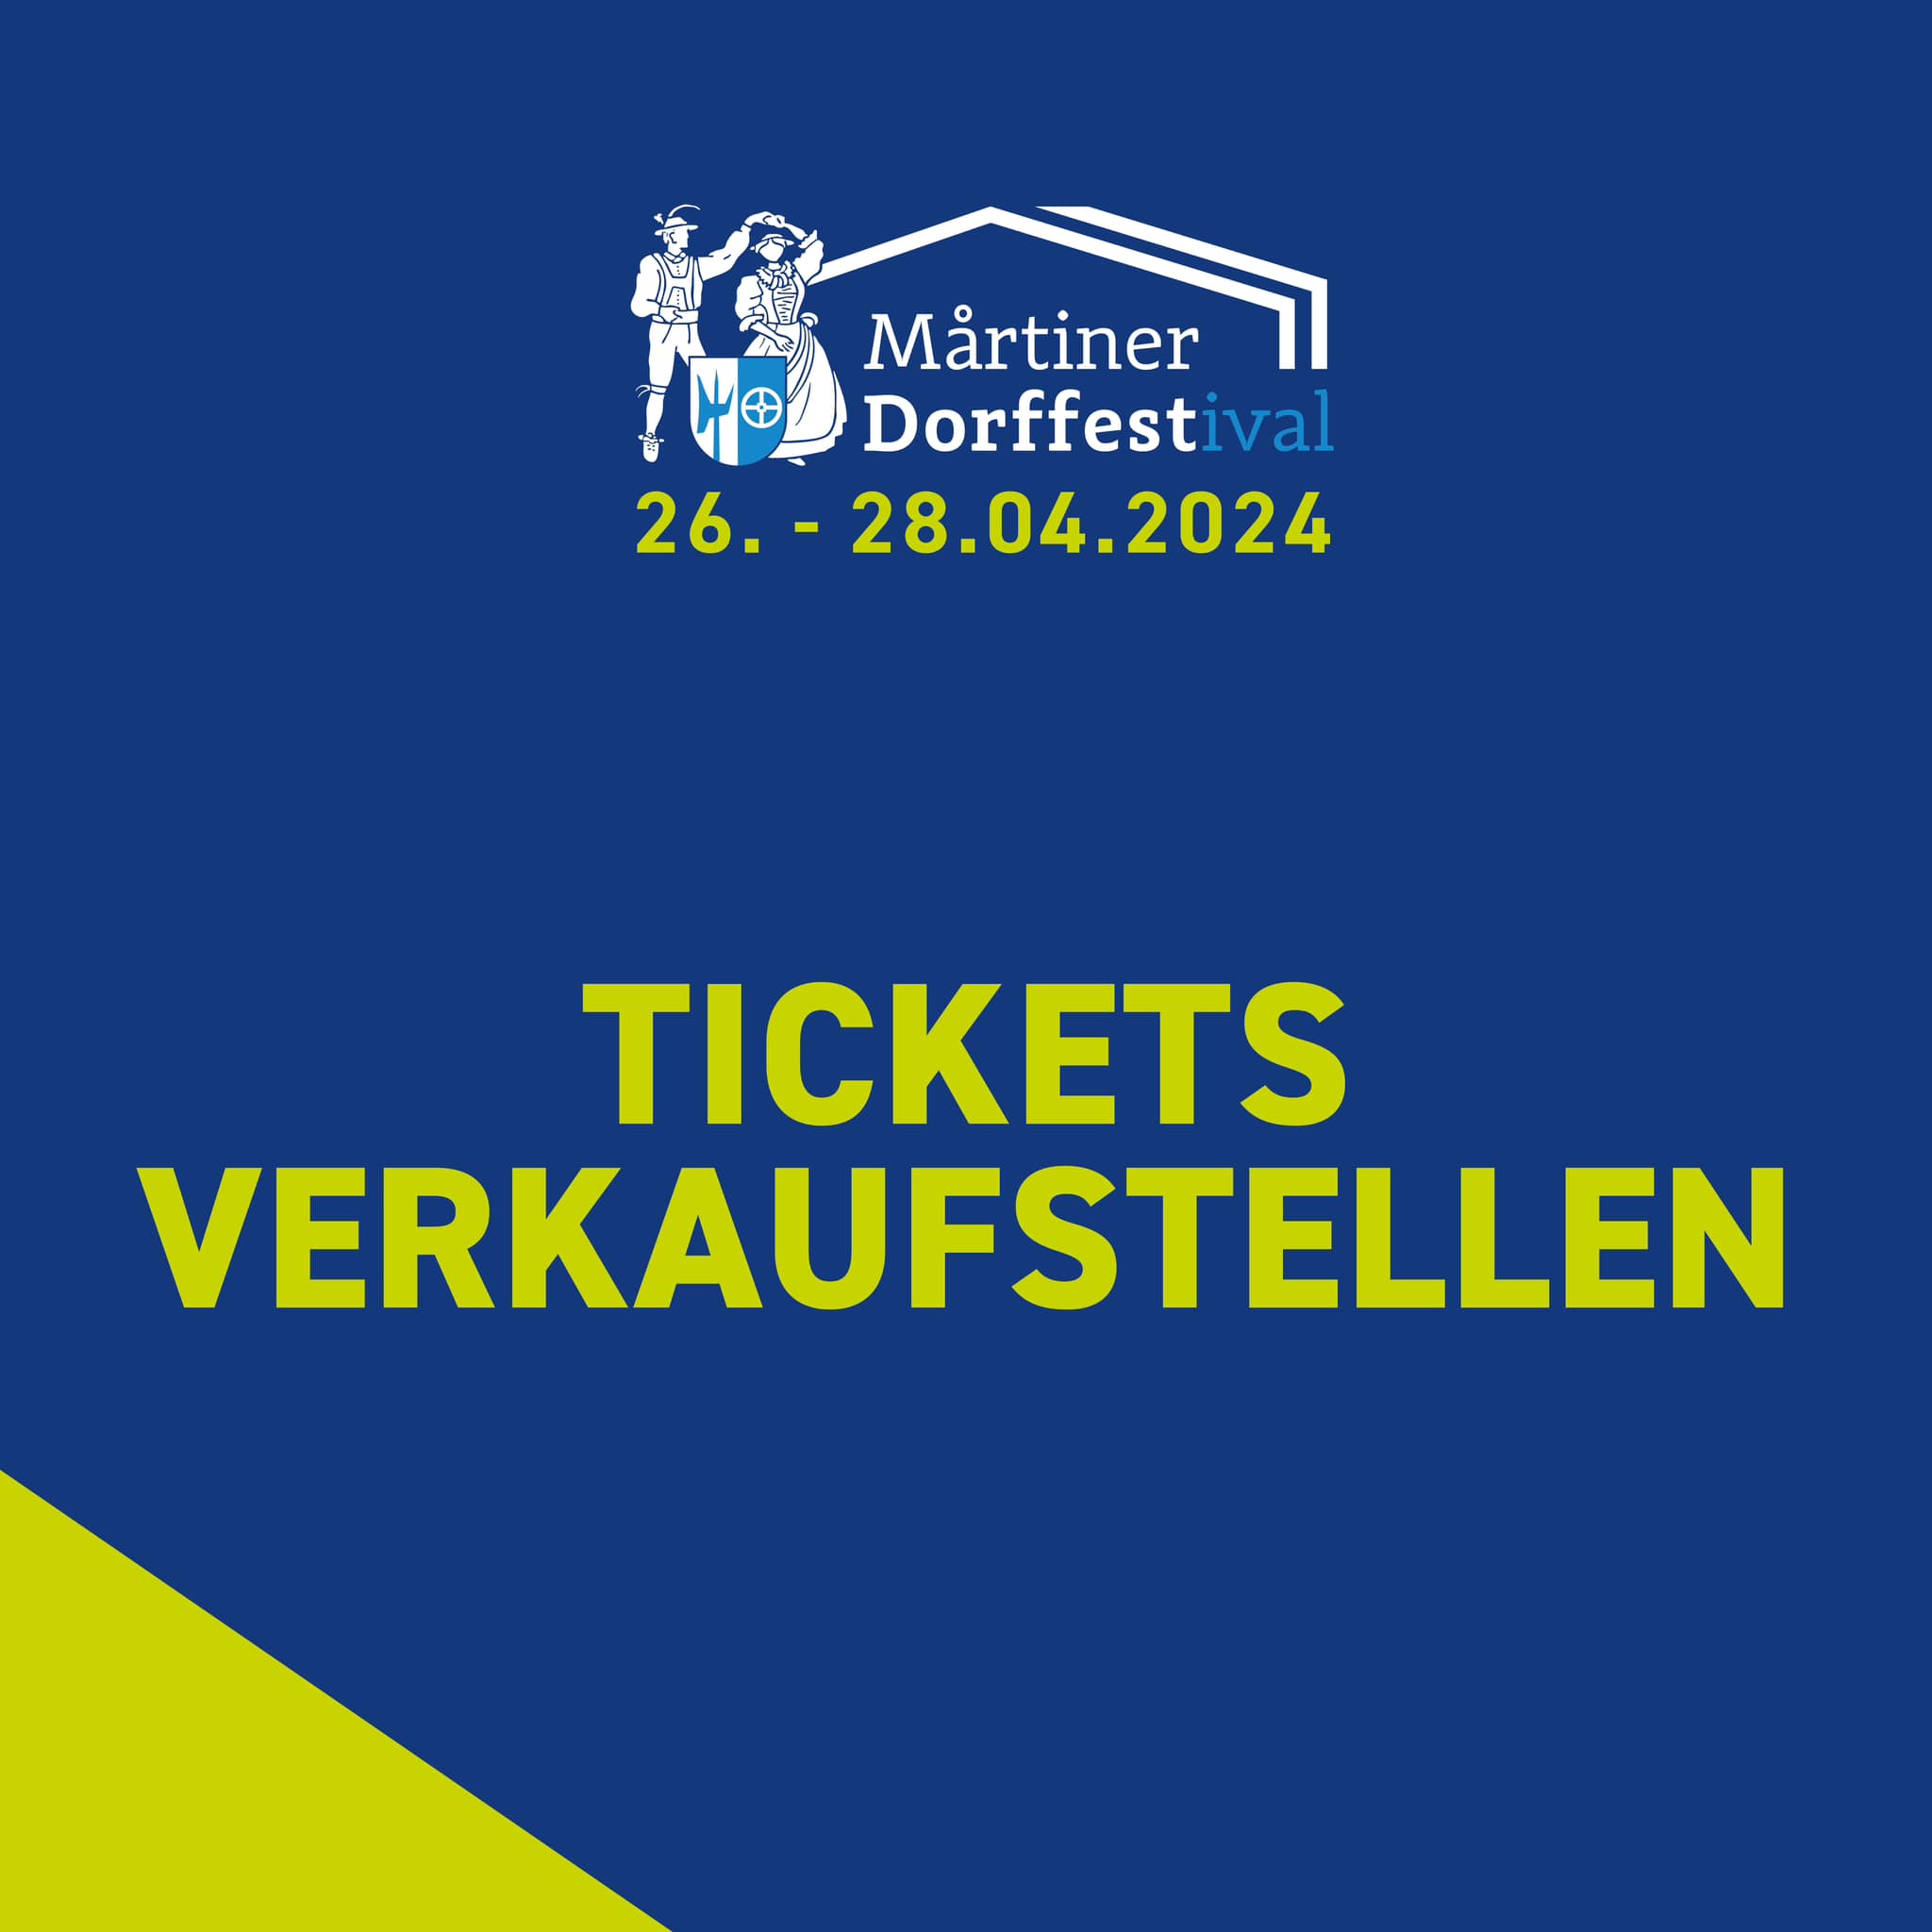 Verkaufsstellen Tickets Mortiner Dorffestival